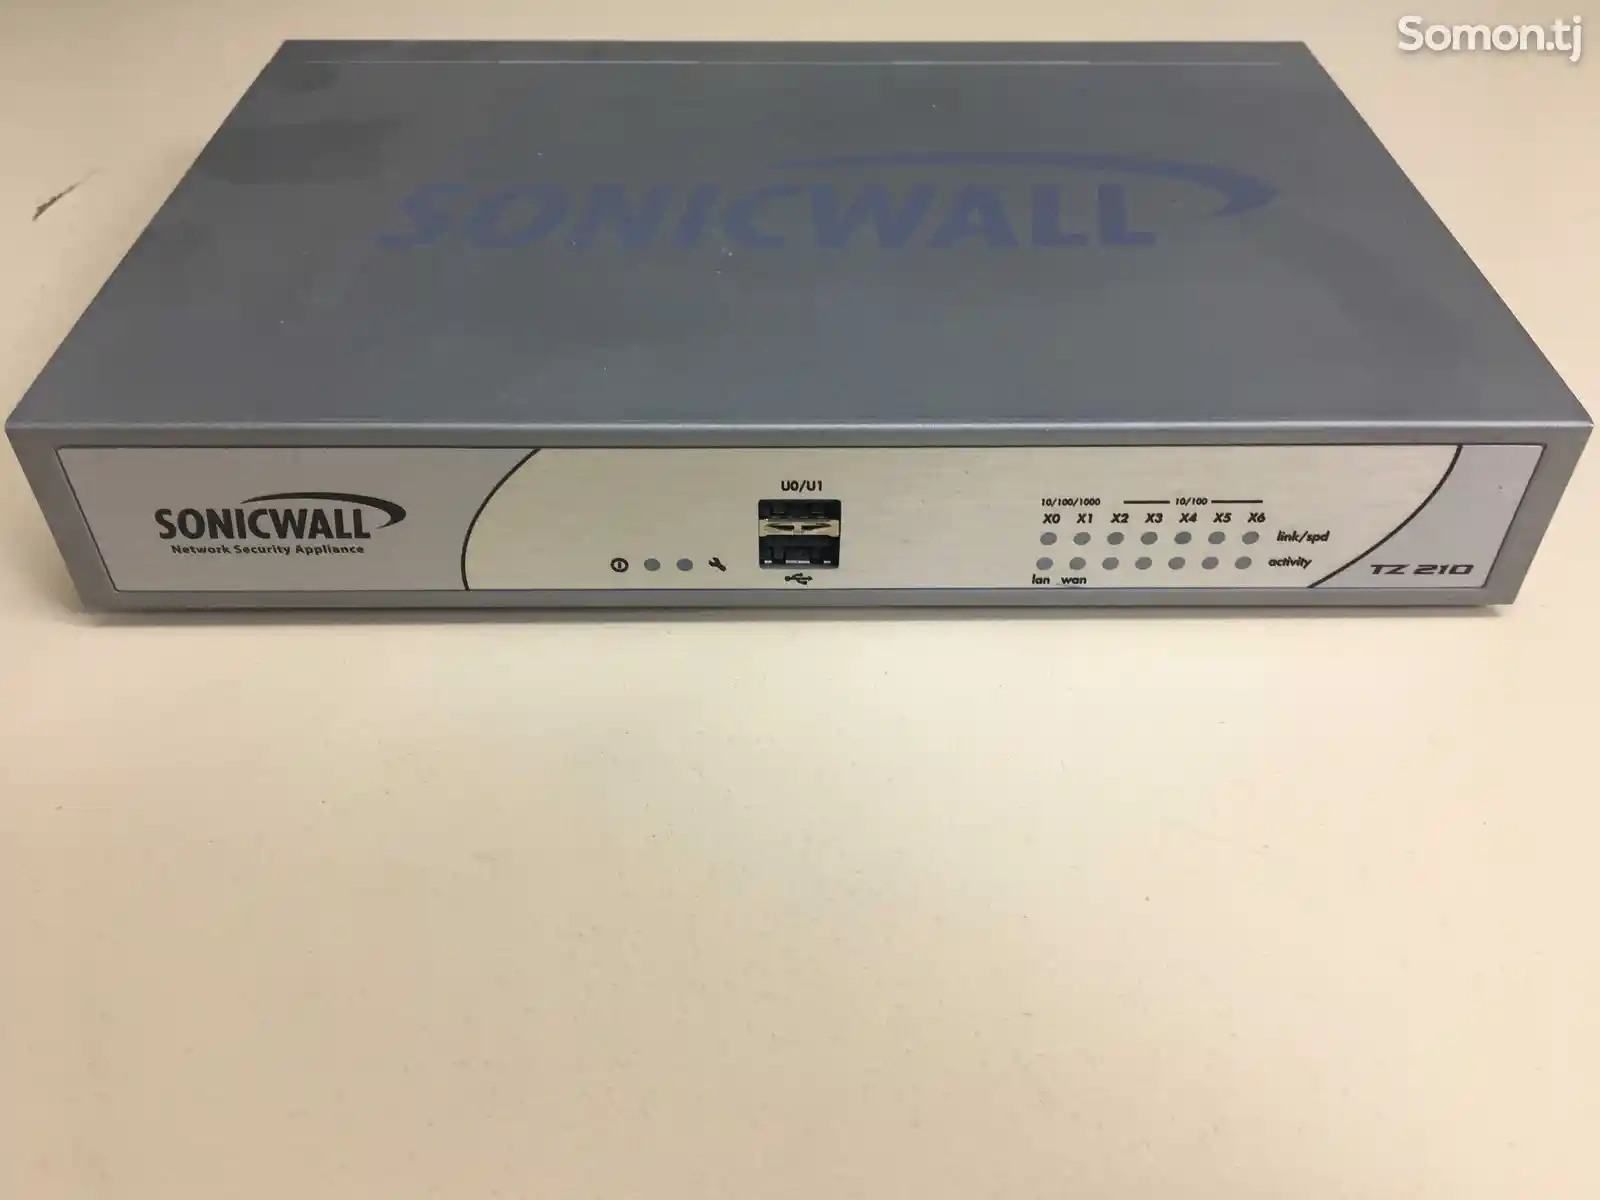 Унифицированный шлюз безопасности SonicWALL TZ 210-1